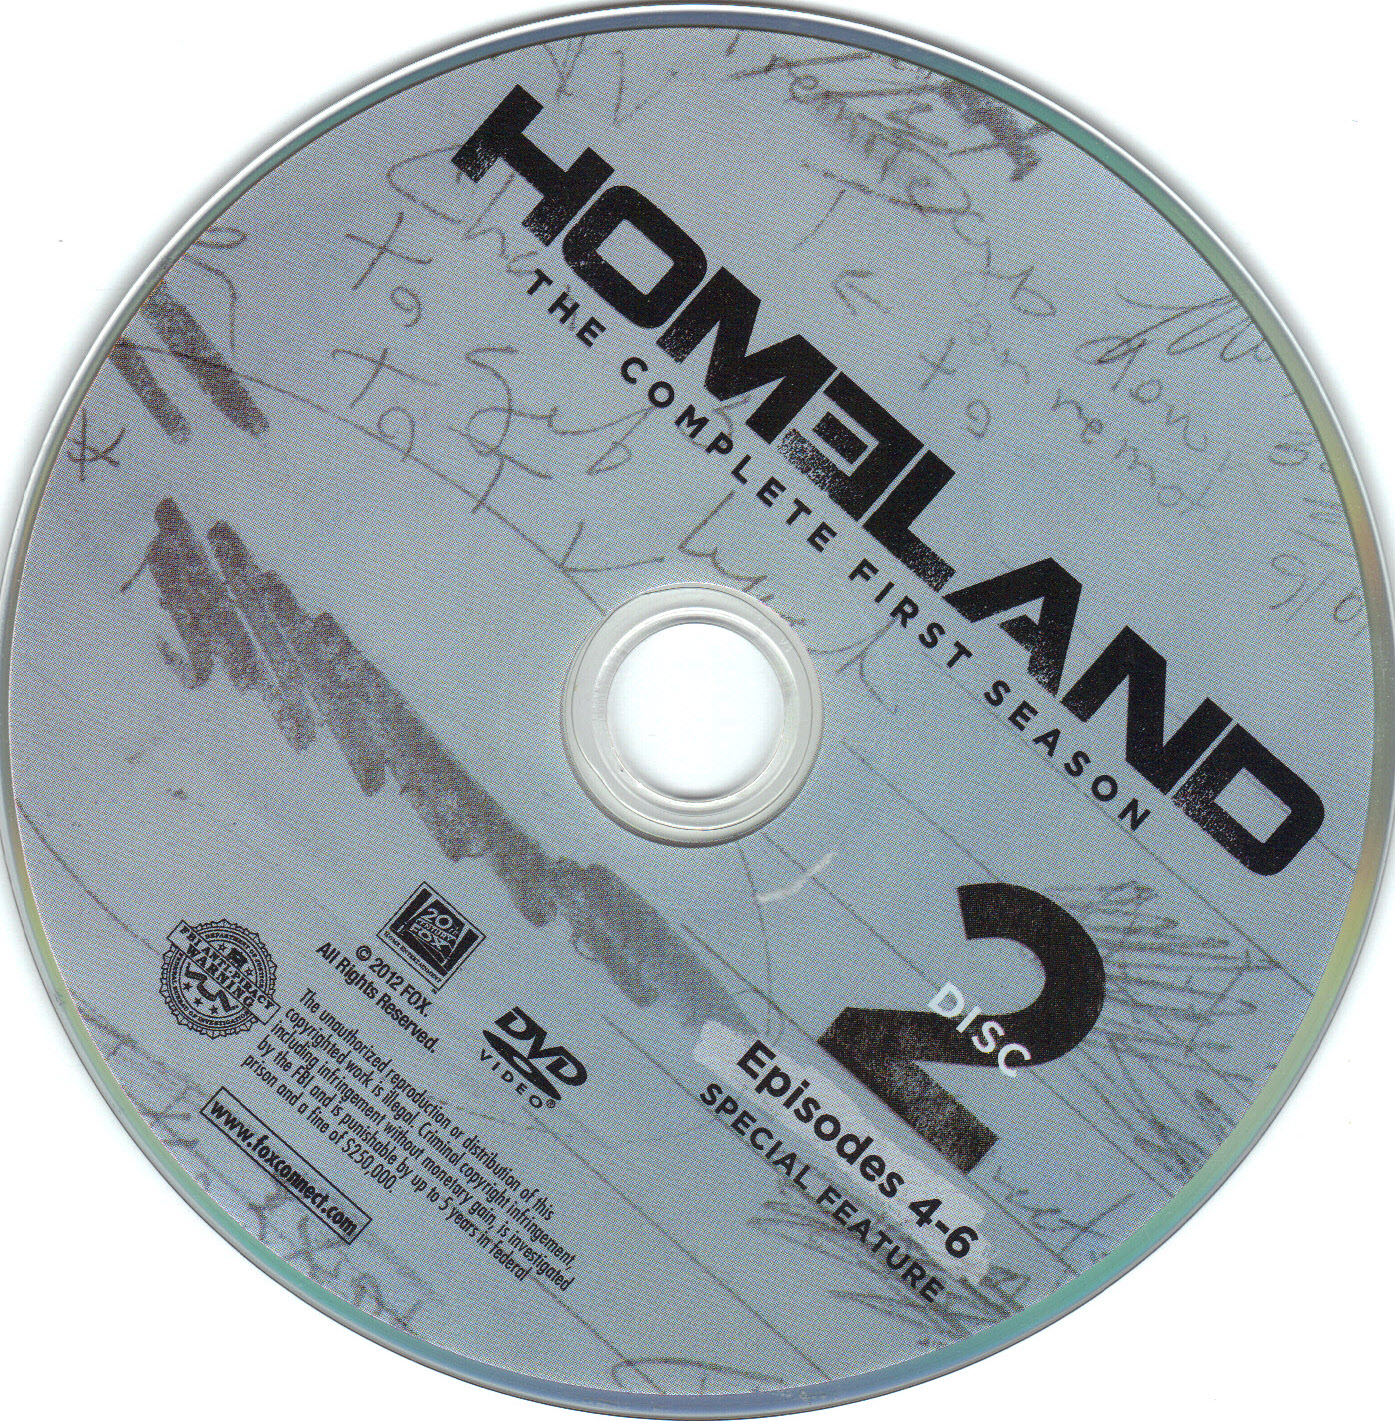 Homeland saison 1 DISC 2